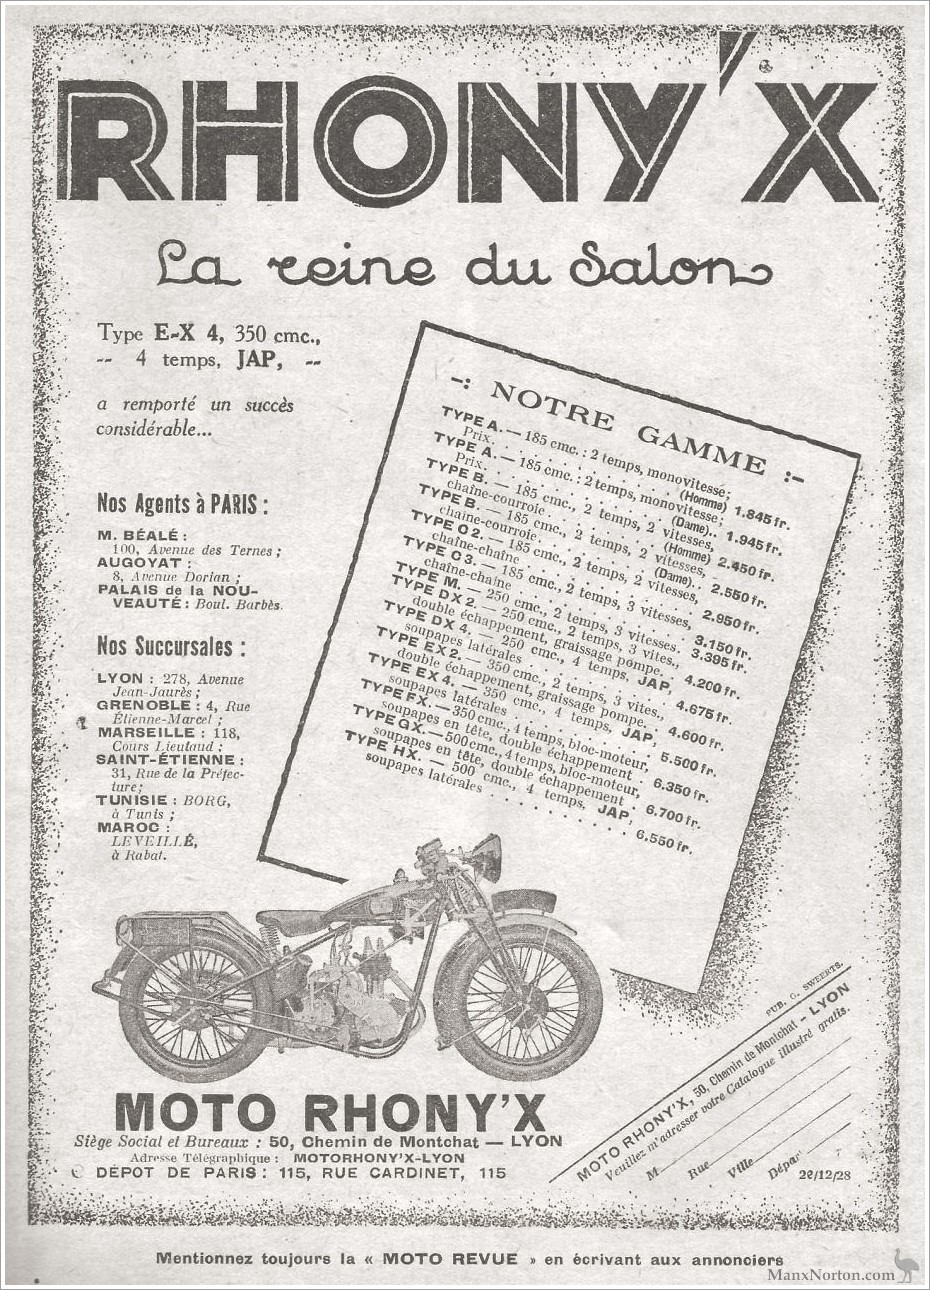 Rhony-x-1929-Advert-Dec-28.jpg